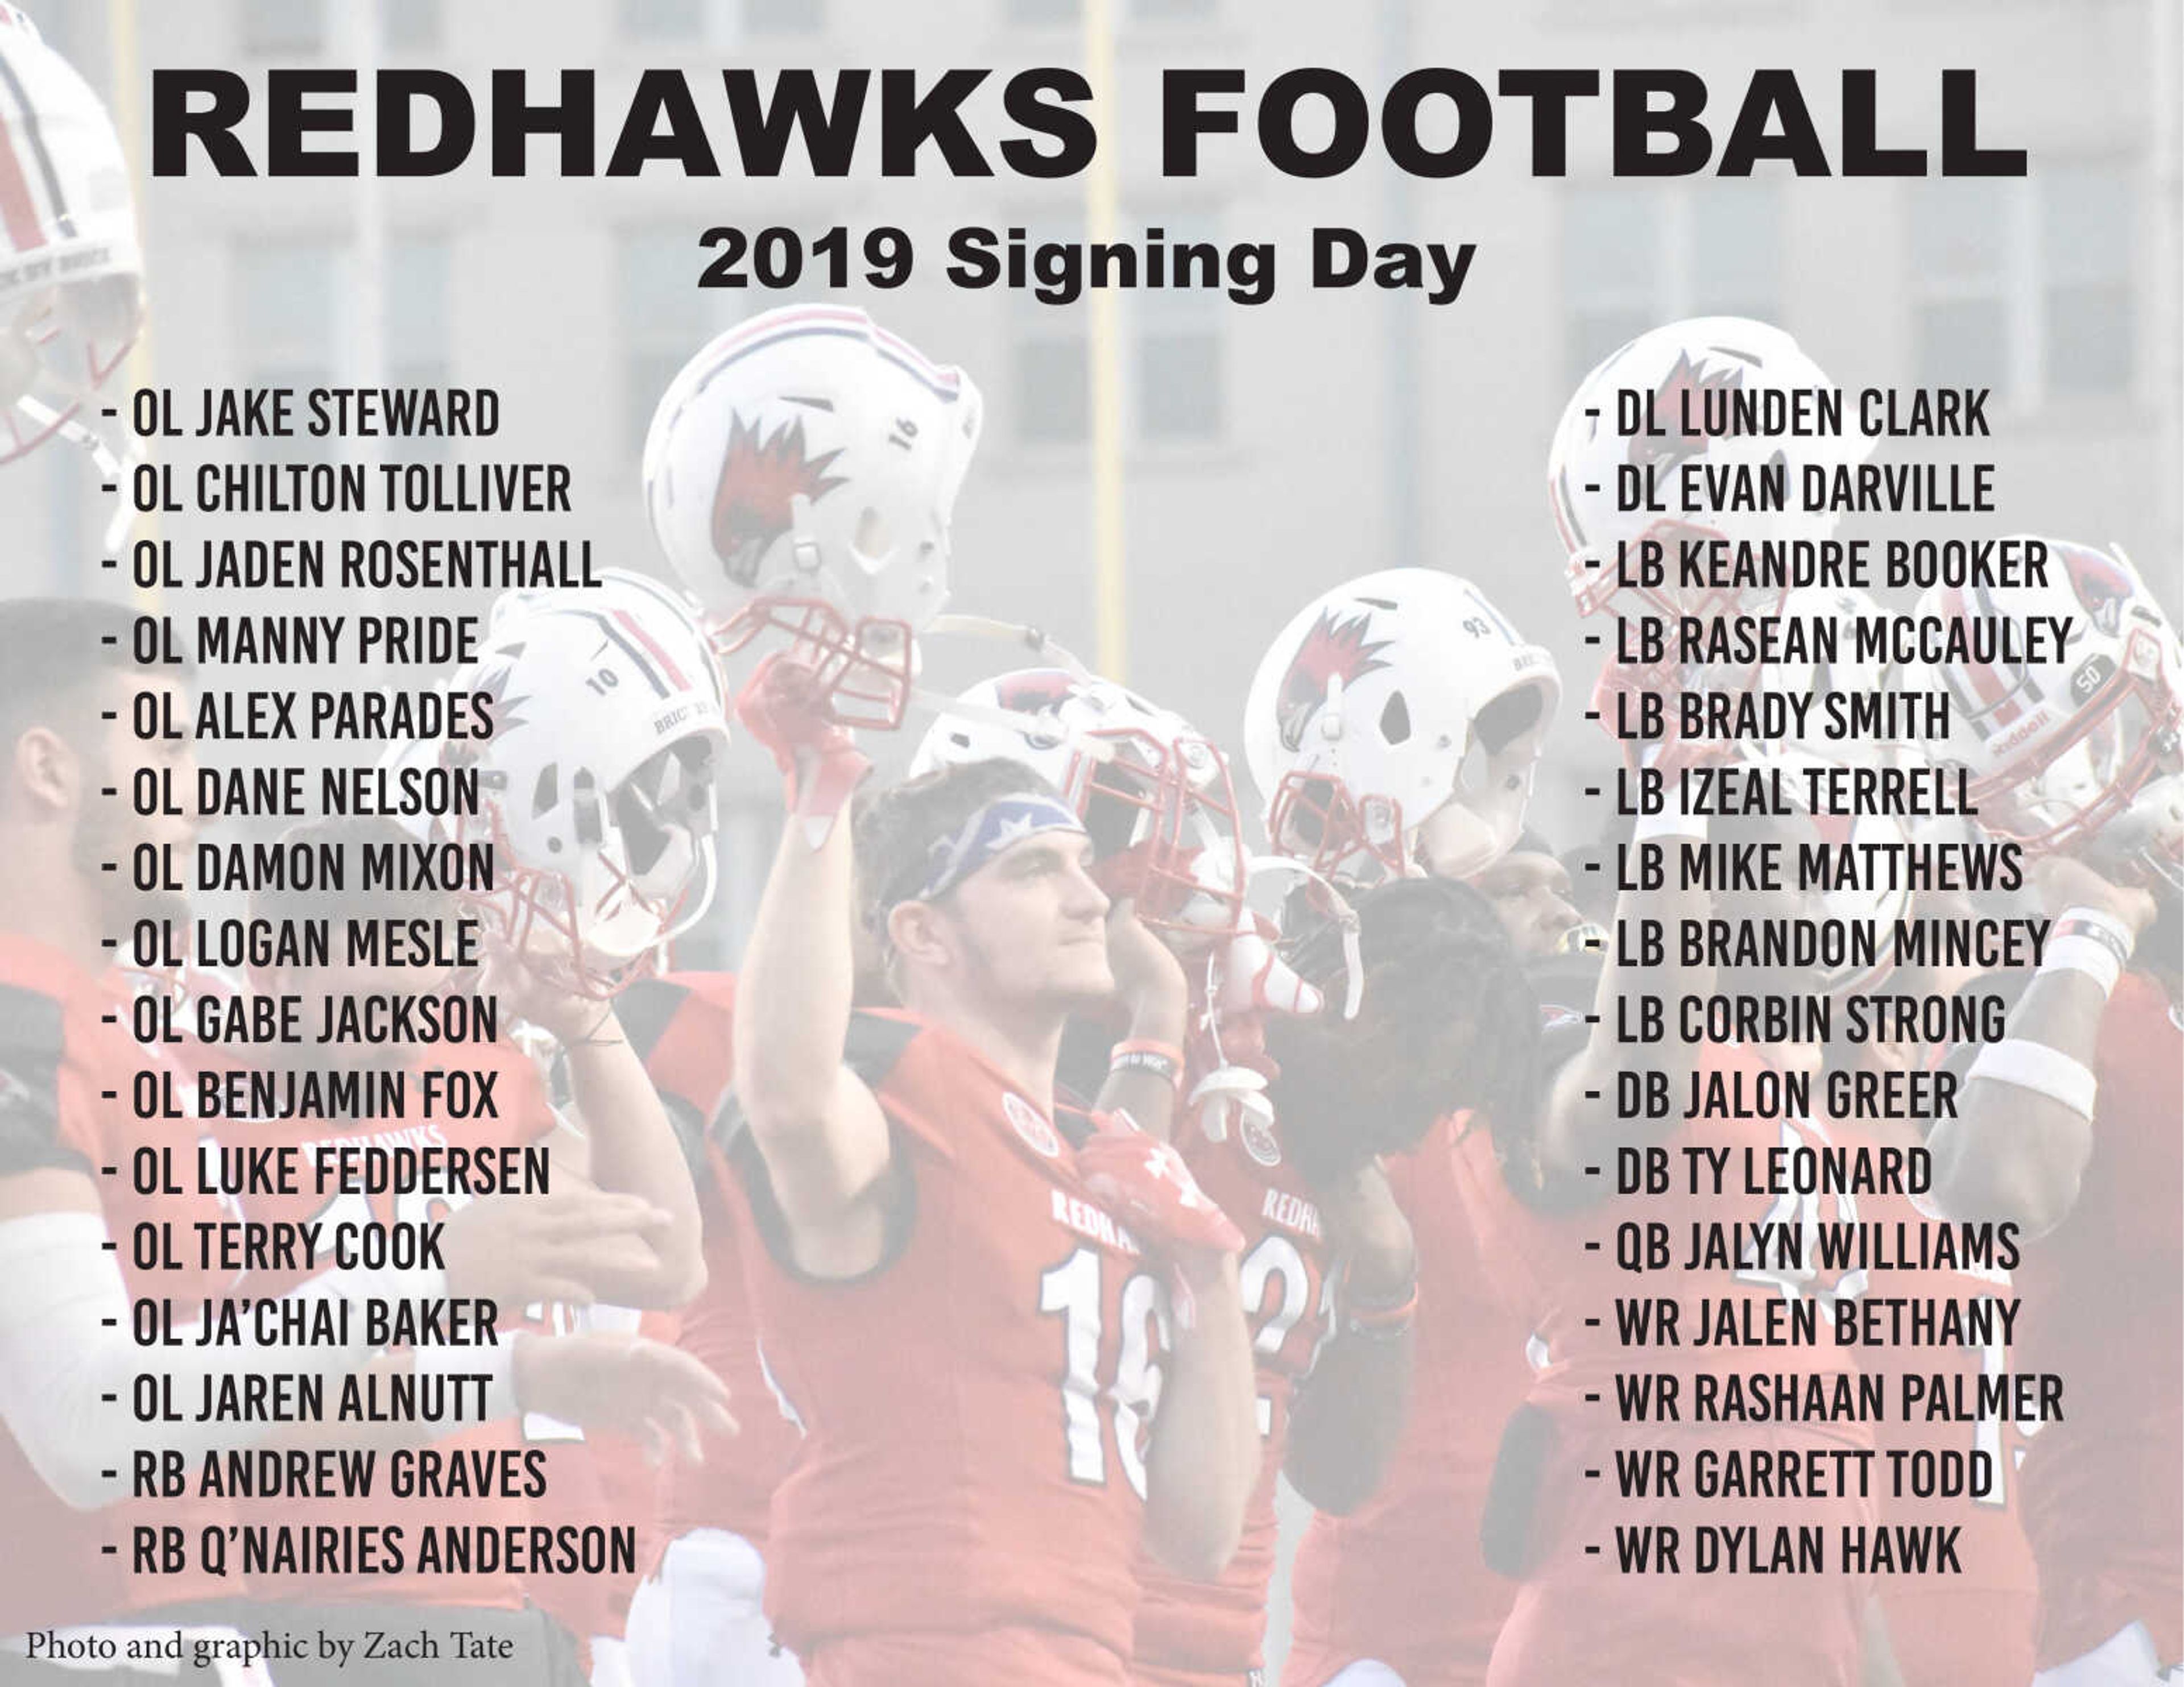 2019 Redhawk football signing day